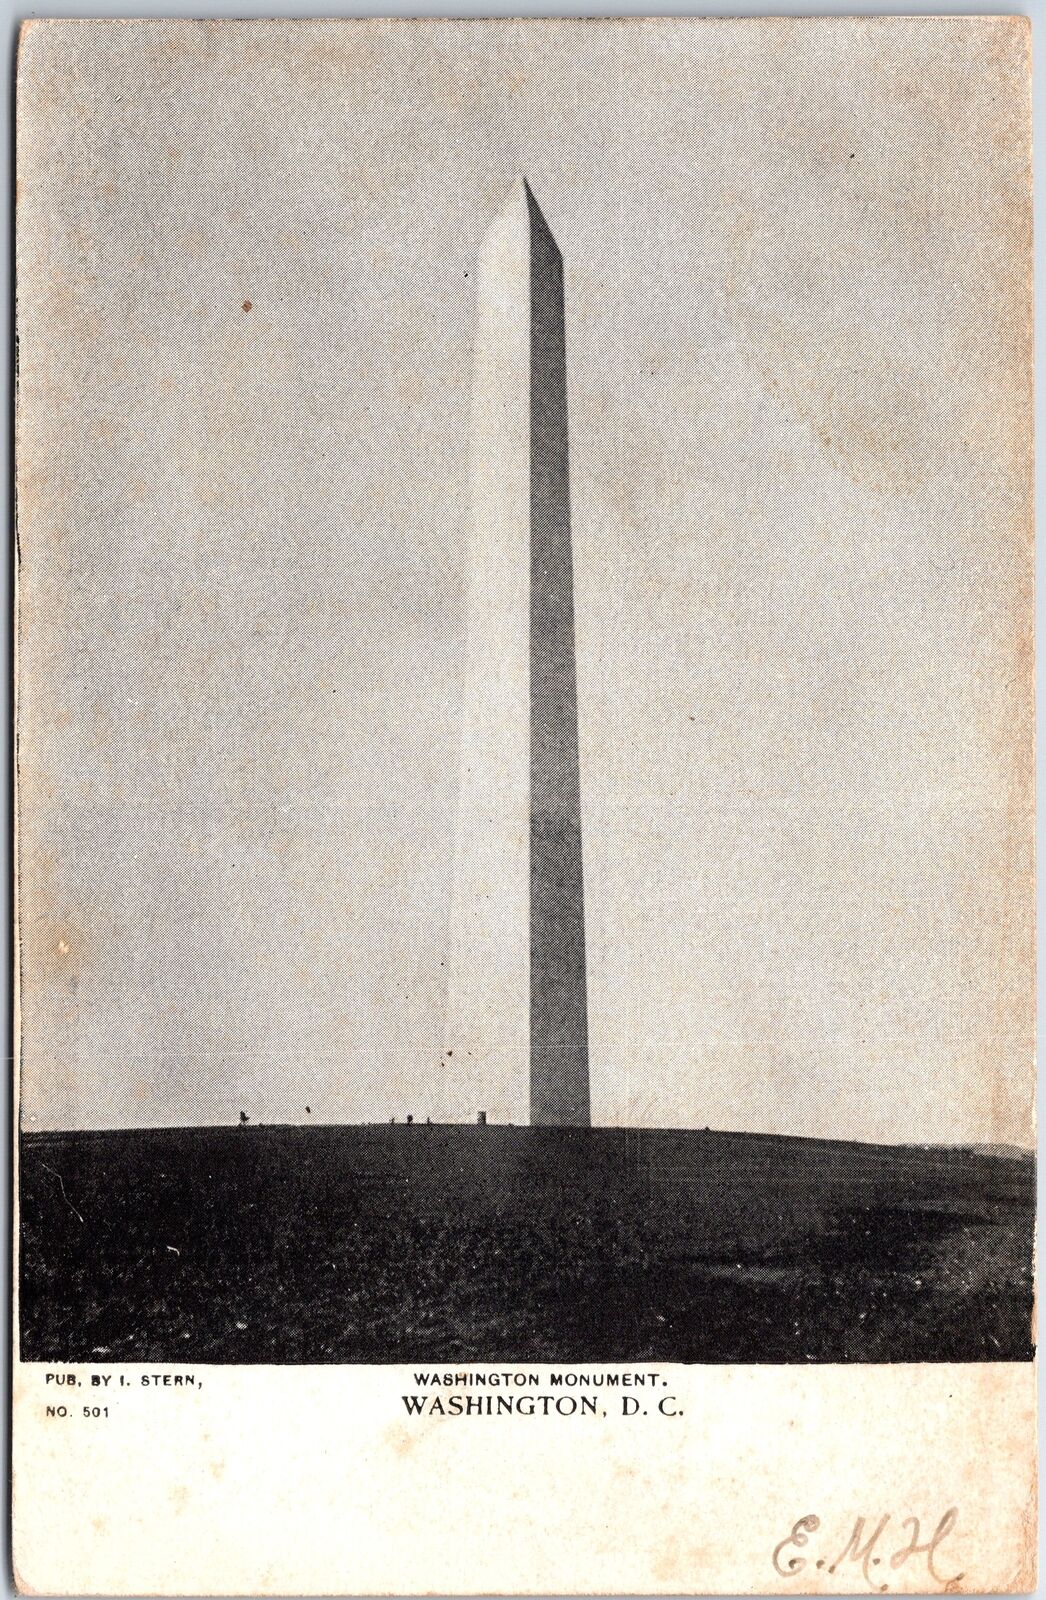 VINTAGE POSTCARD THE WASHINGTON MONUMENT AT WASHINGTON D.C. c. 1901-1905